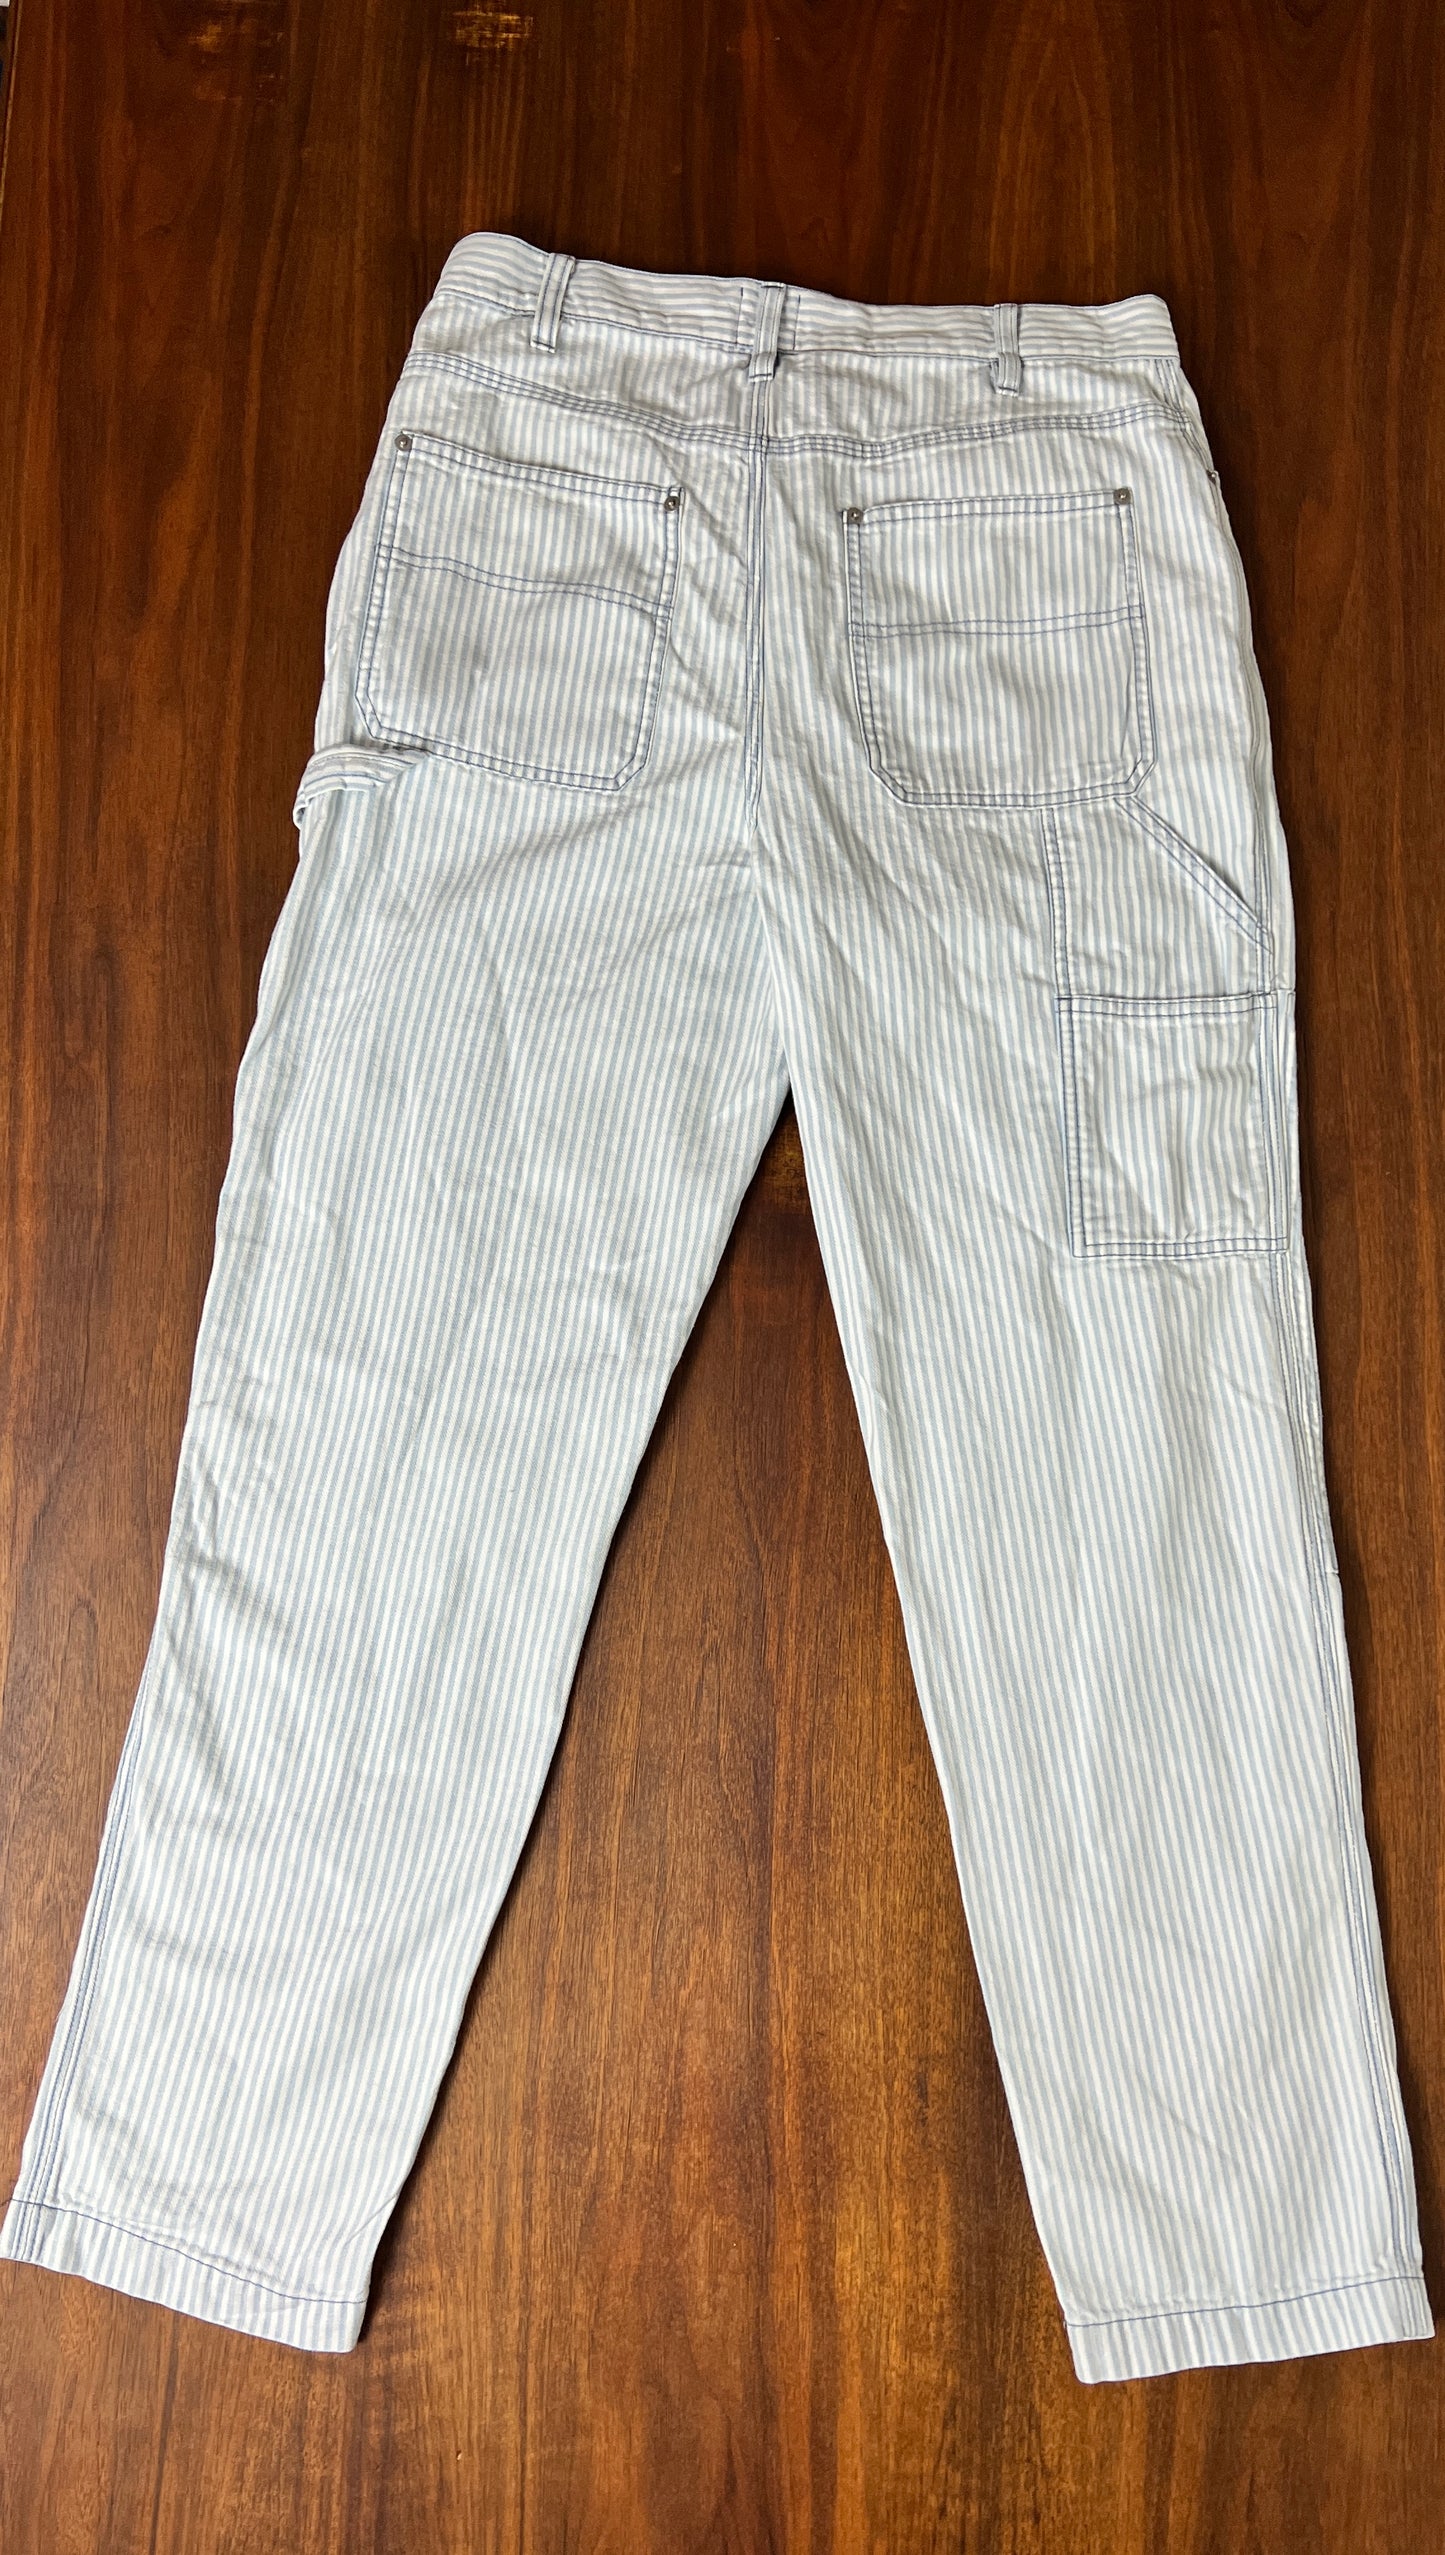 The Hickory Stripe Carpenter Pants